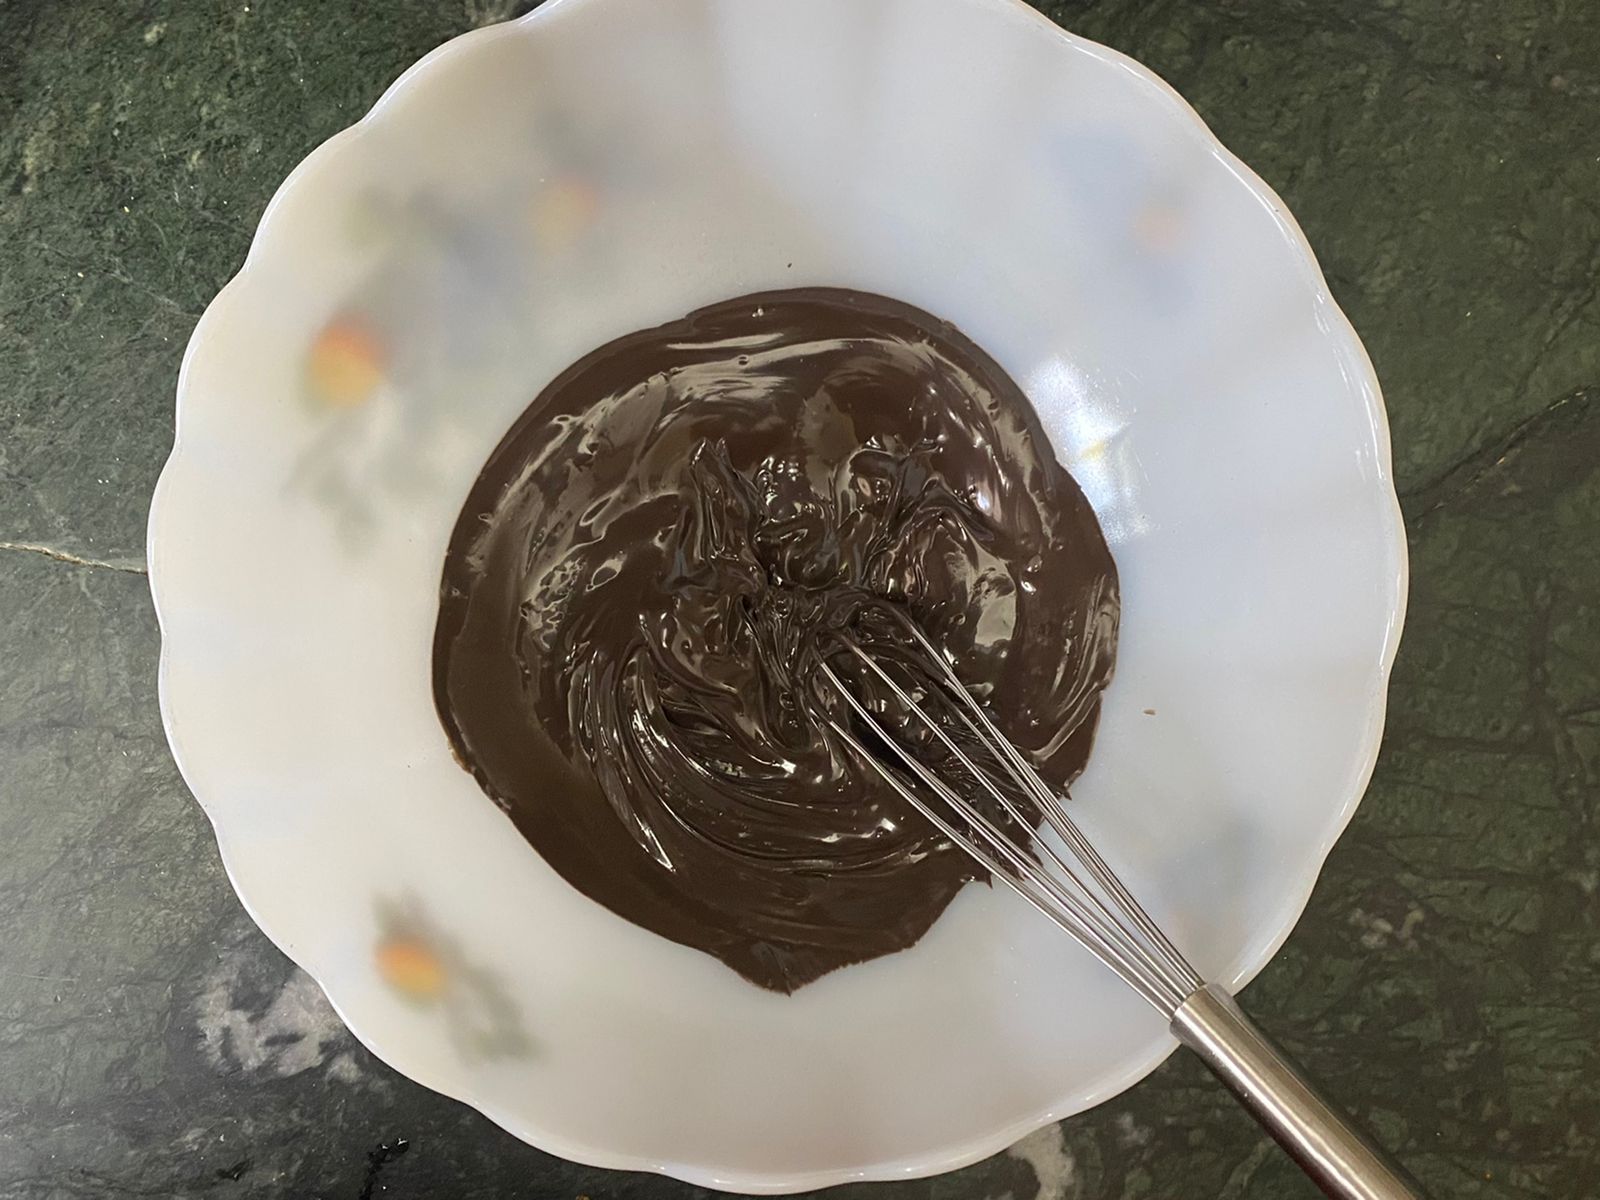 Dark Chocolate Almond and Hazelnut Clusters Recipe